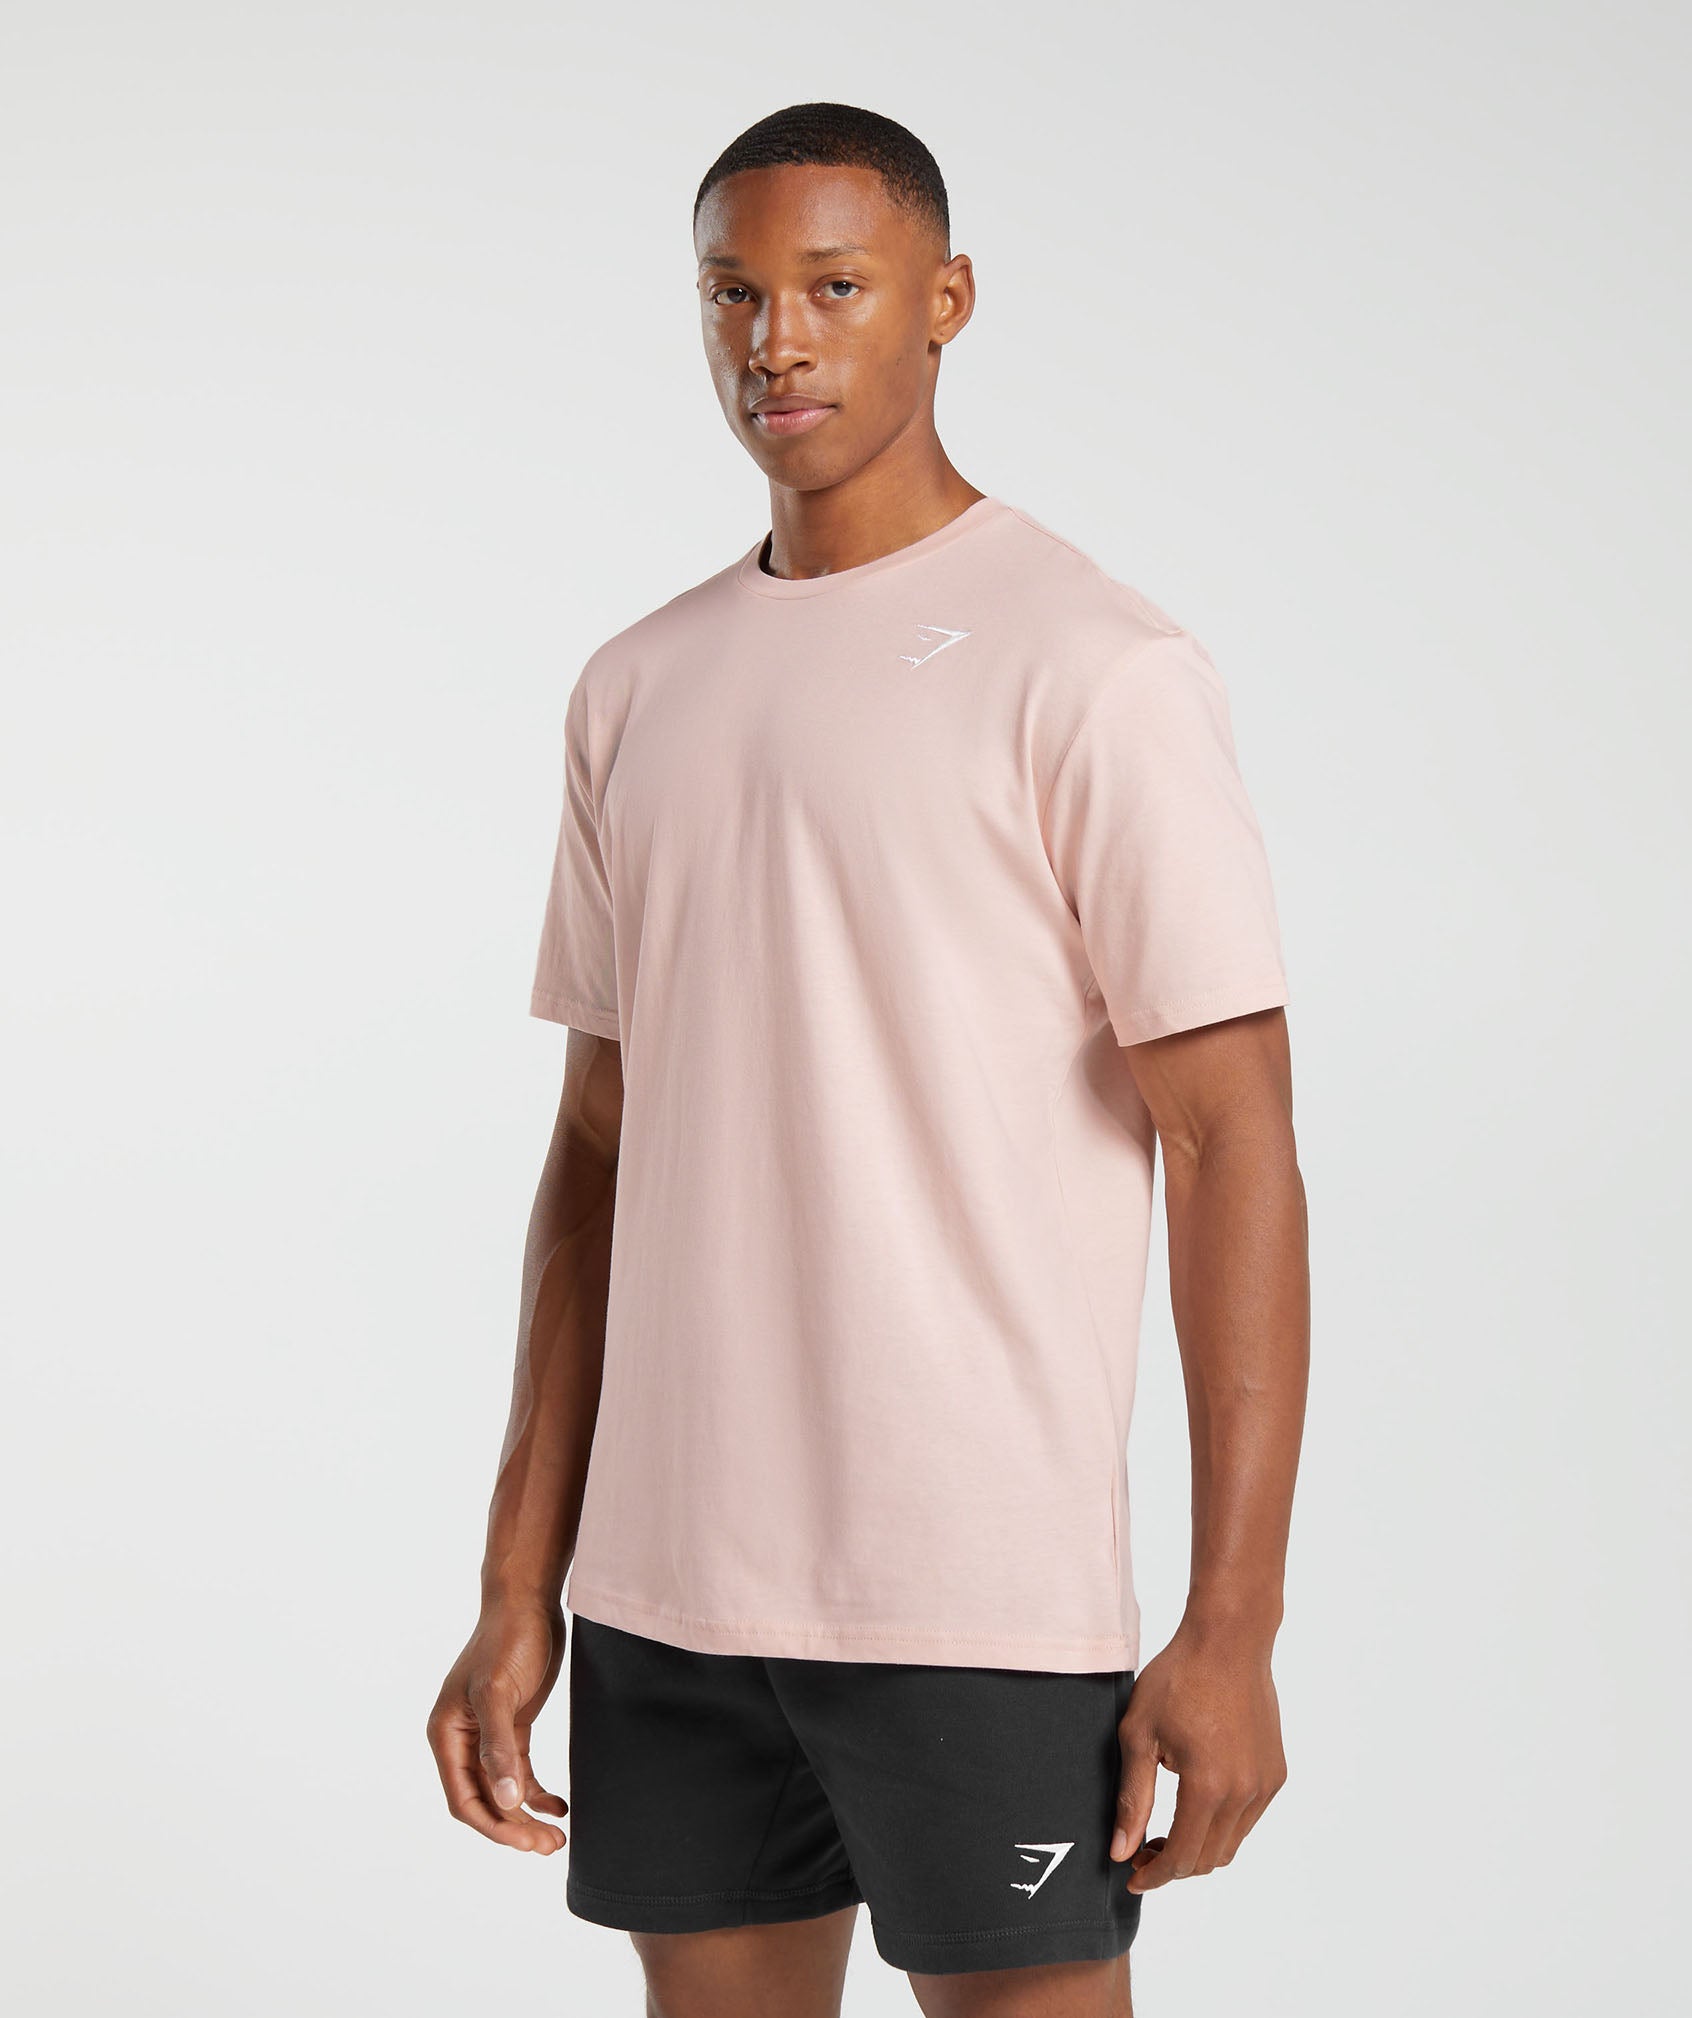 Crest T-Shirt in Misty Pink